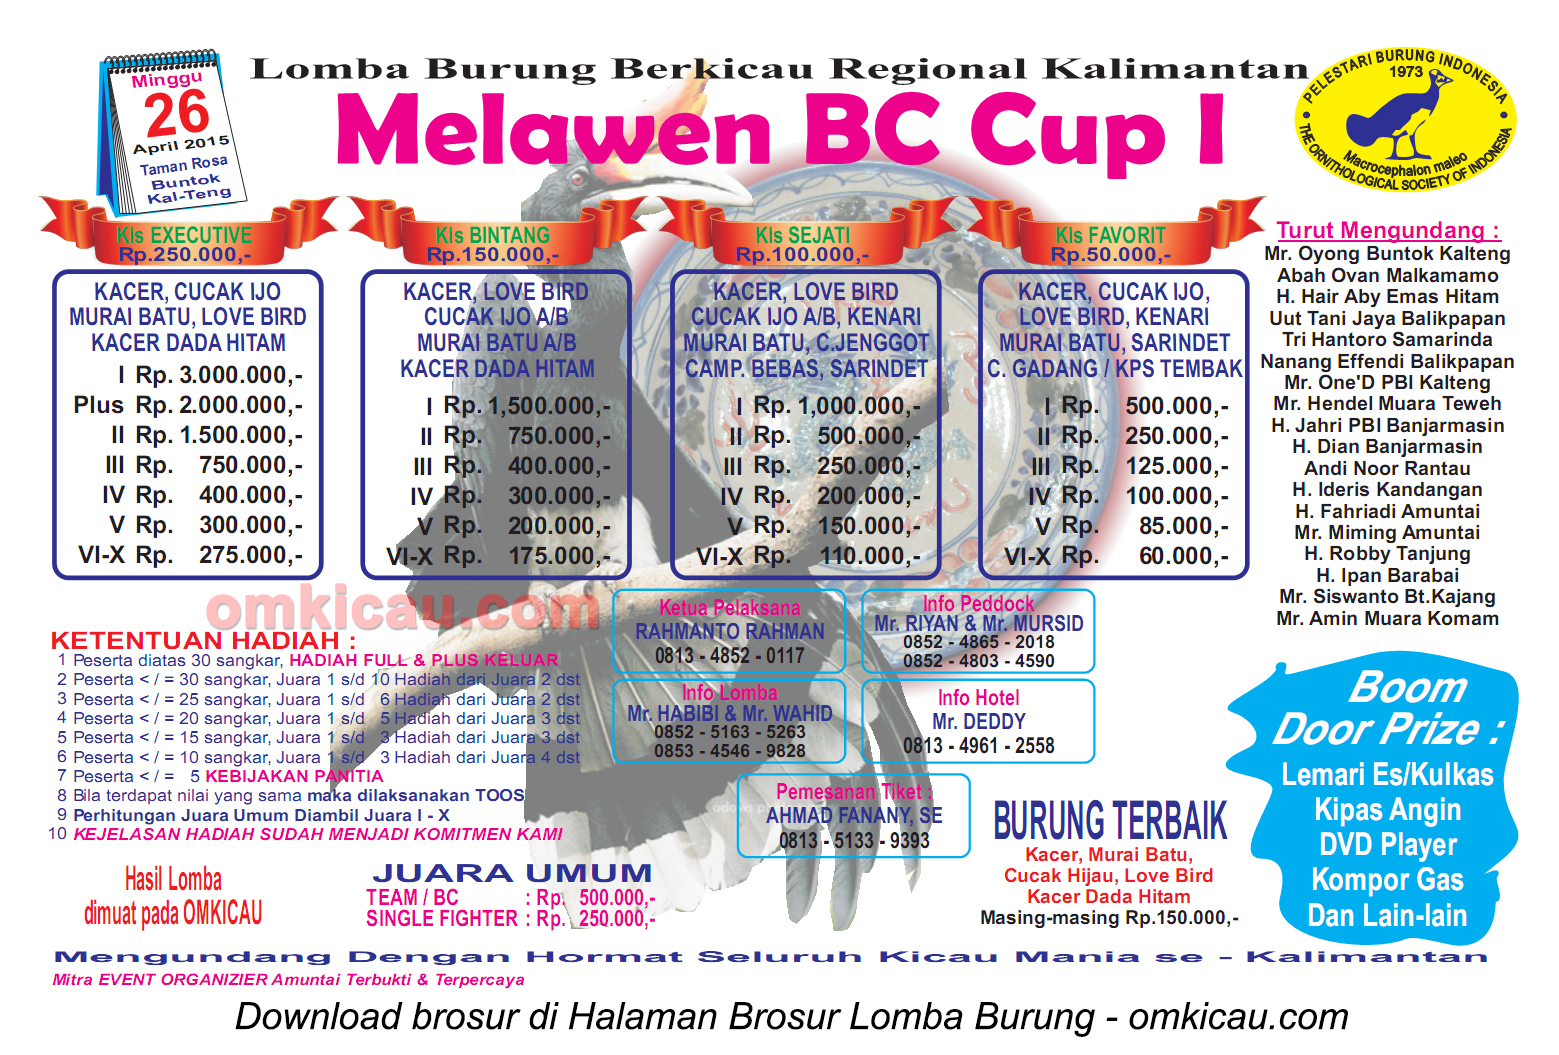 Brosur Lomba Burung Berkicau Melawen BC Cup I, Buntok, 26 April 2015